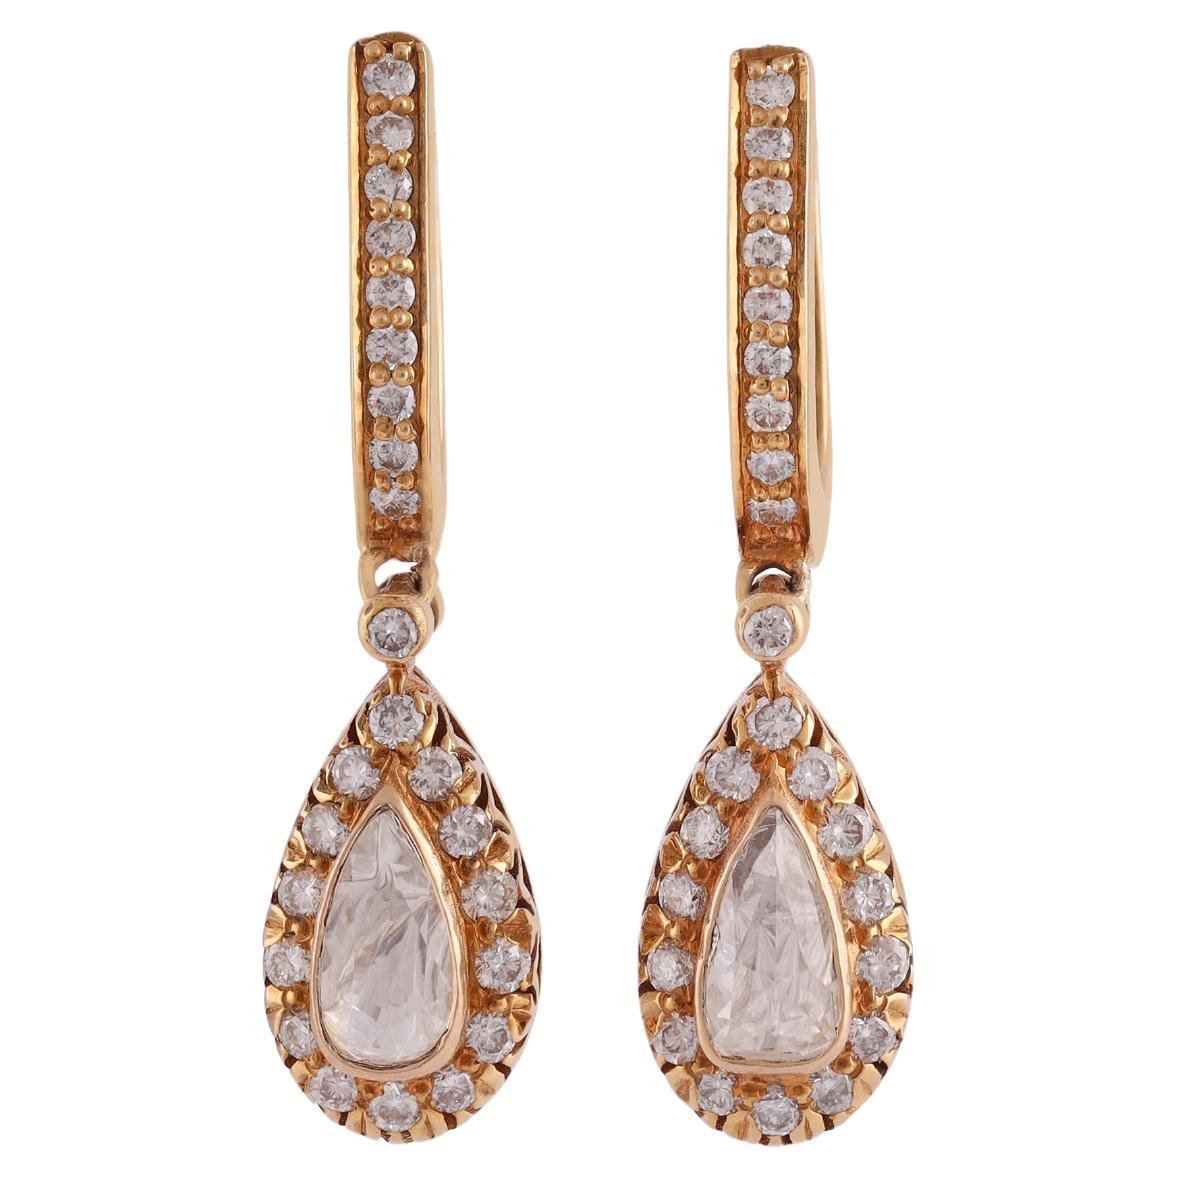 1.06 Carat Diamond earring in Victorian Style